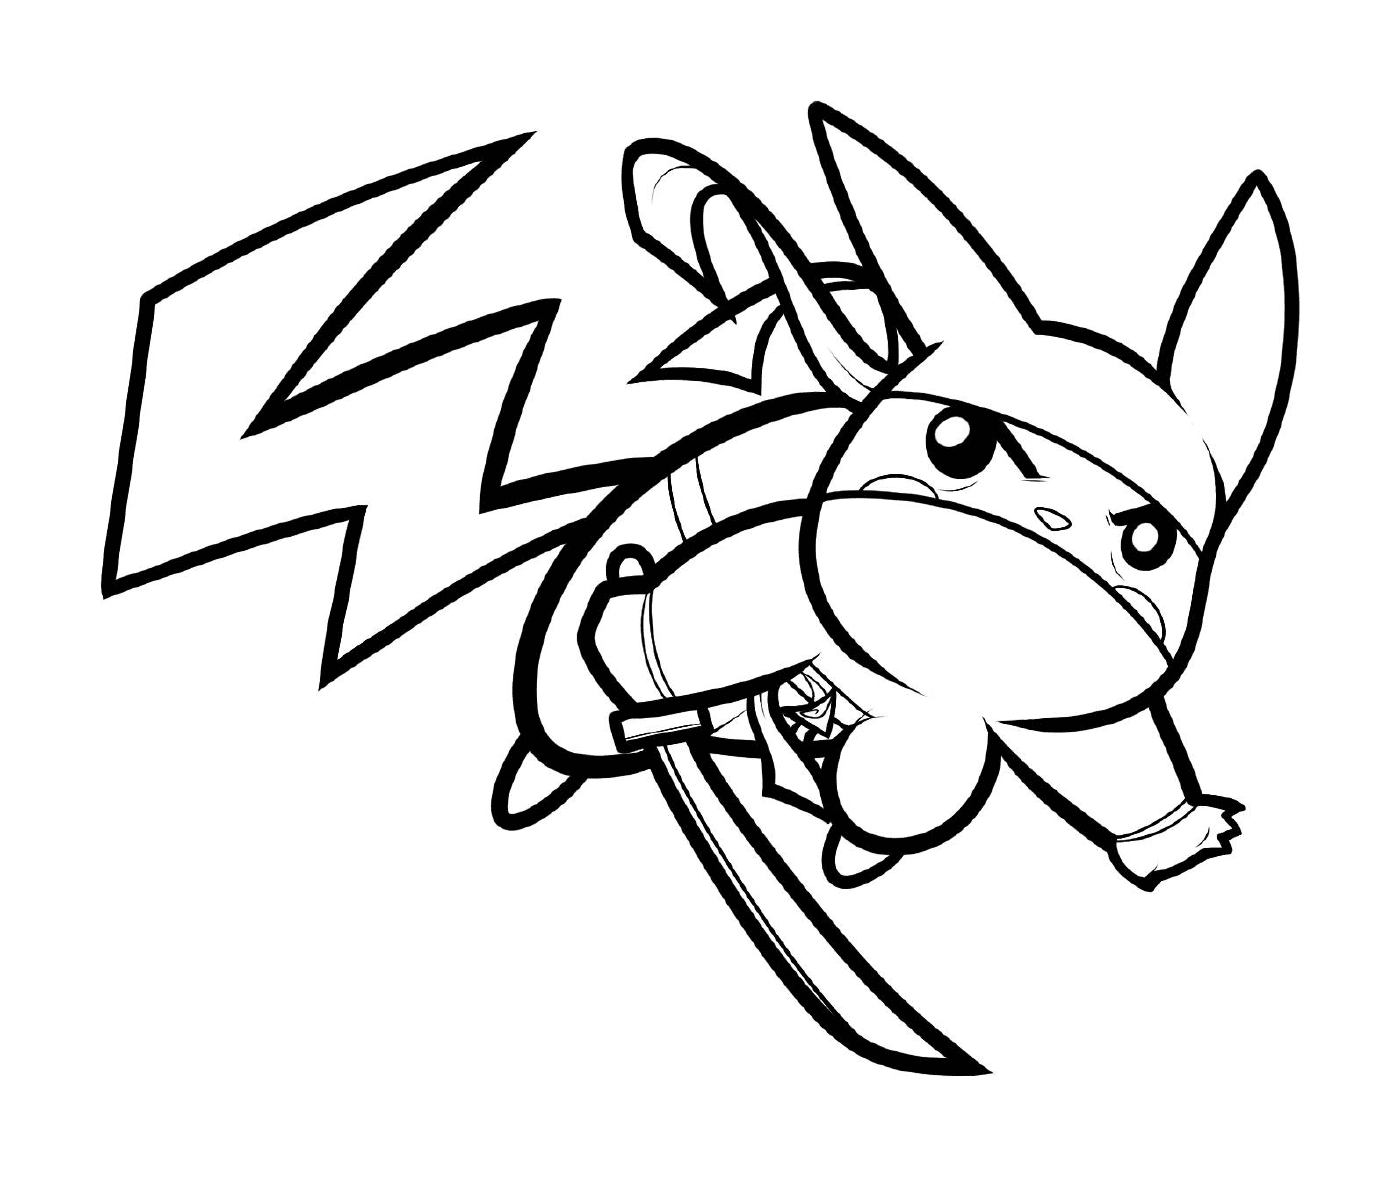  Pikachu con un atteggiamento ninja 